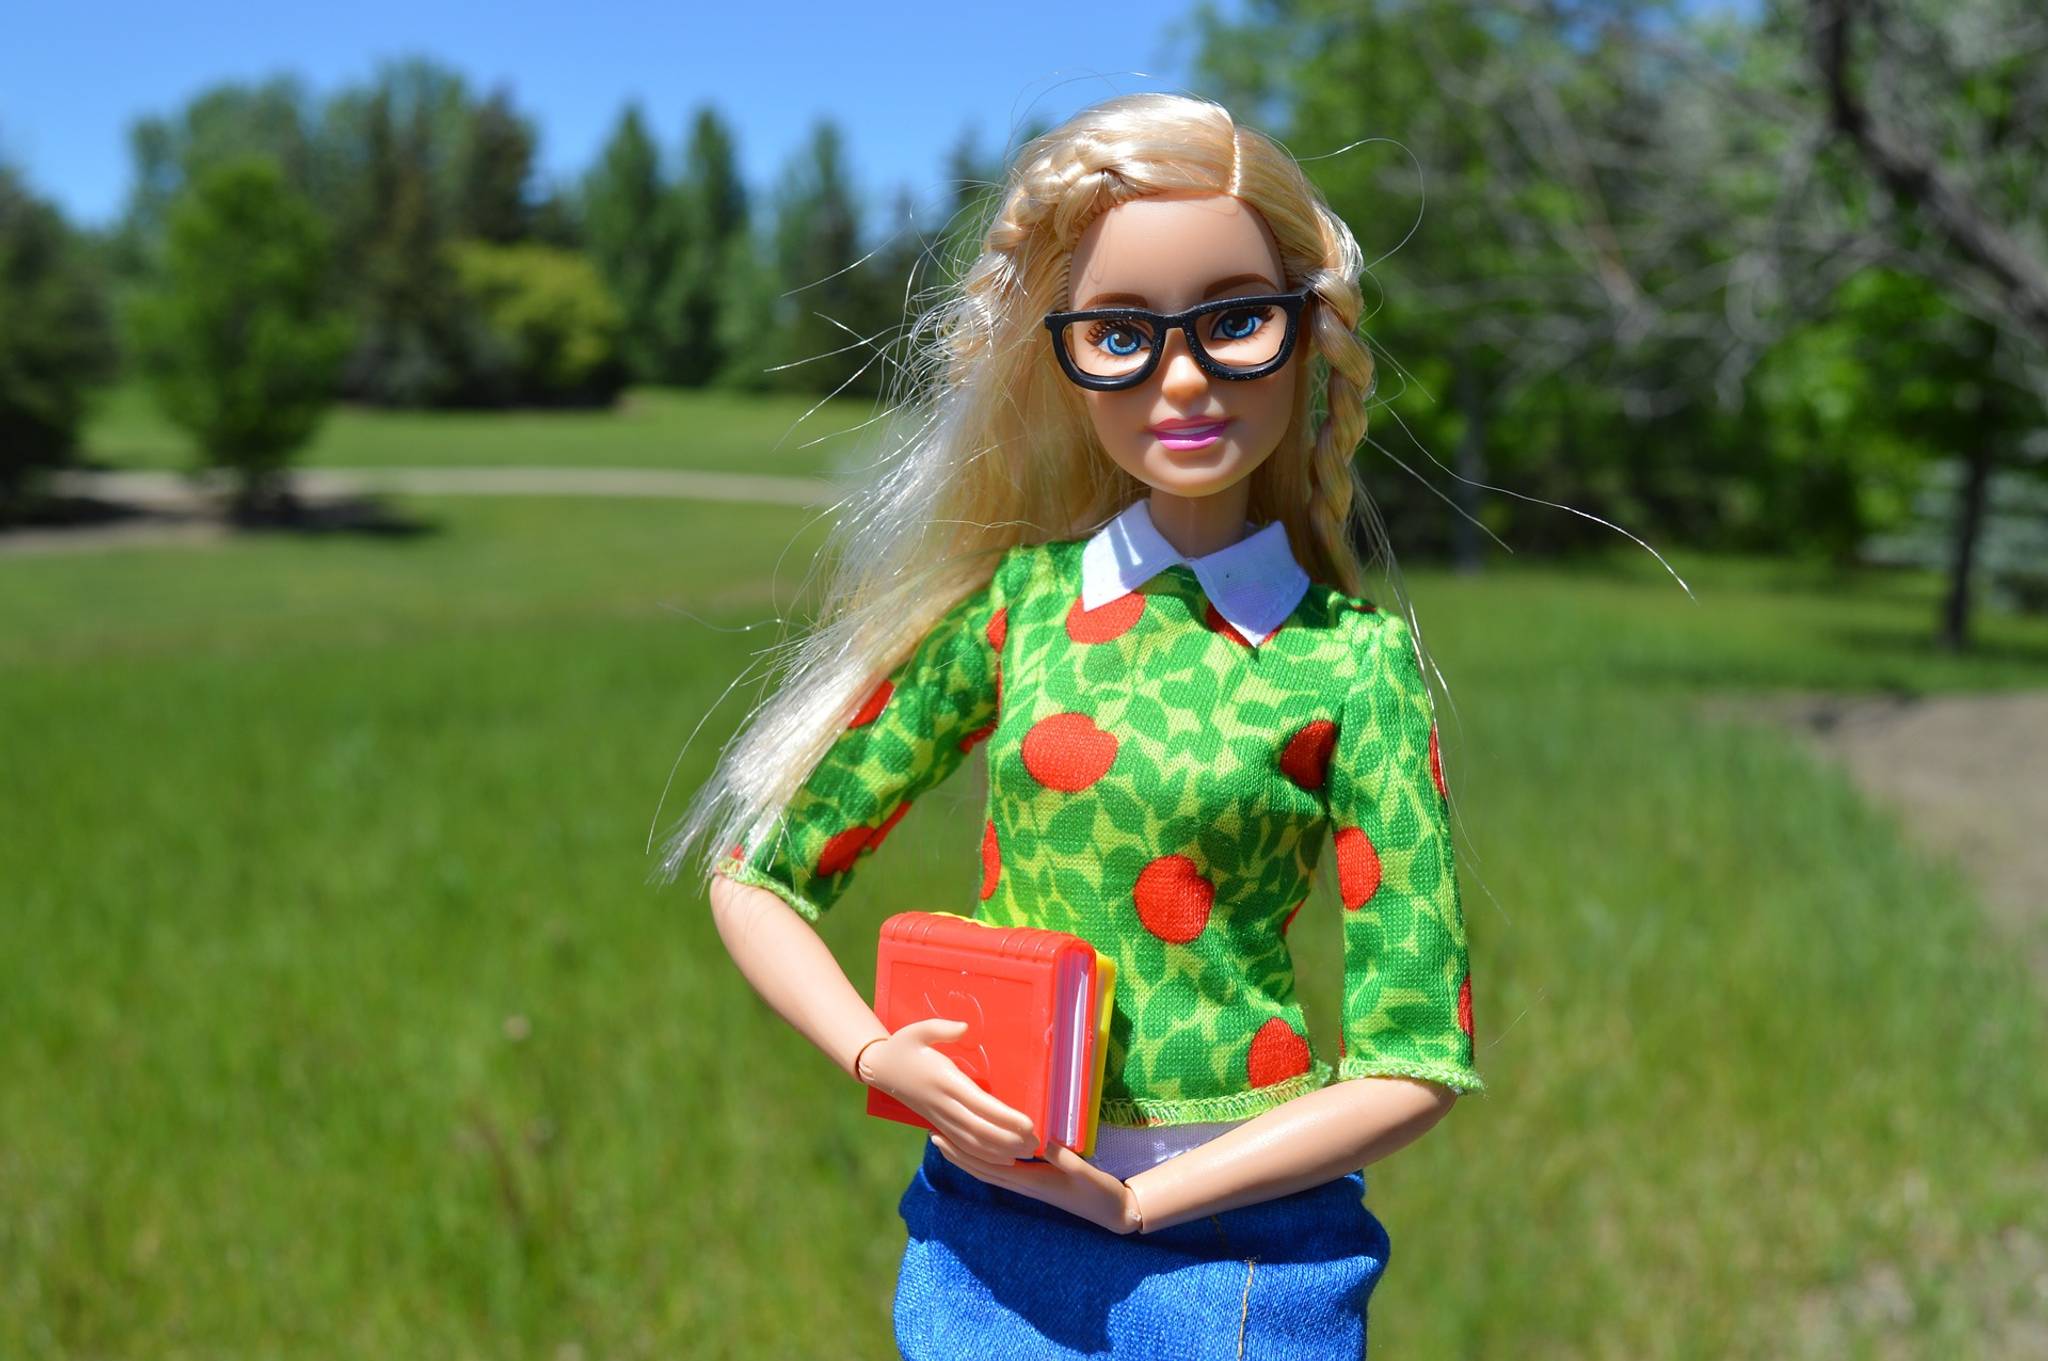 Barbie makes a comeback